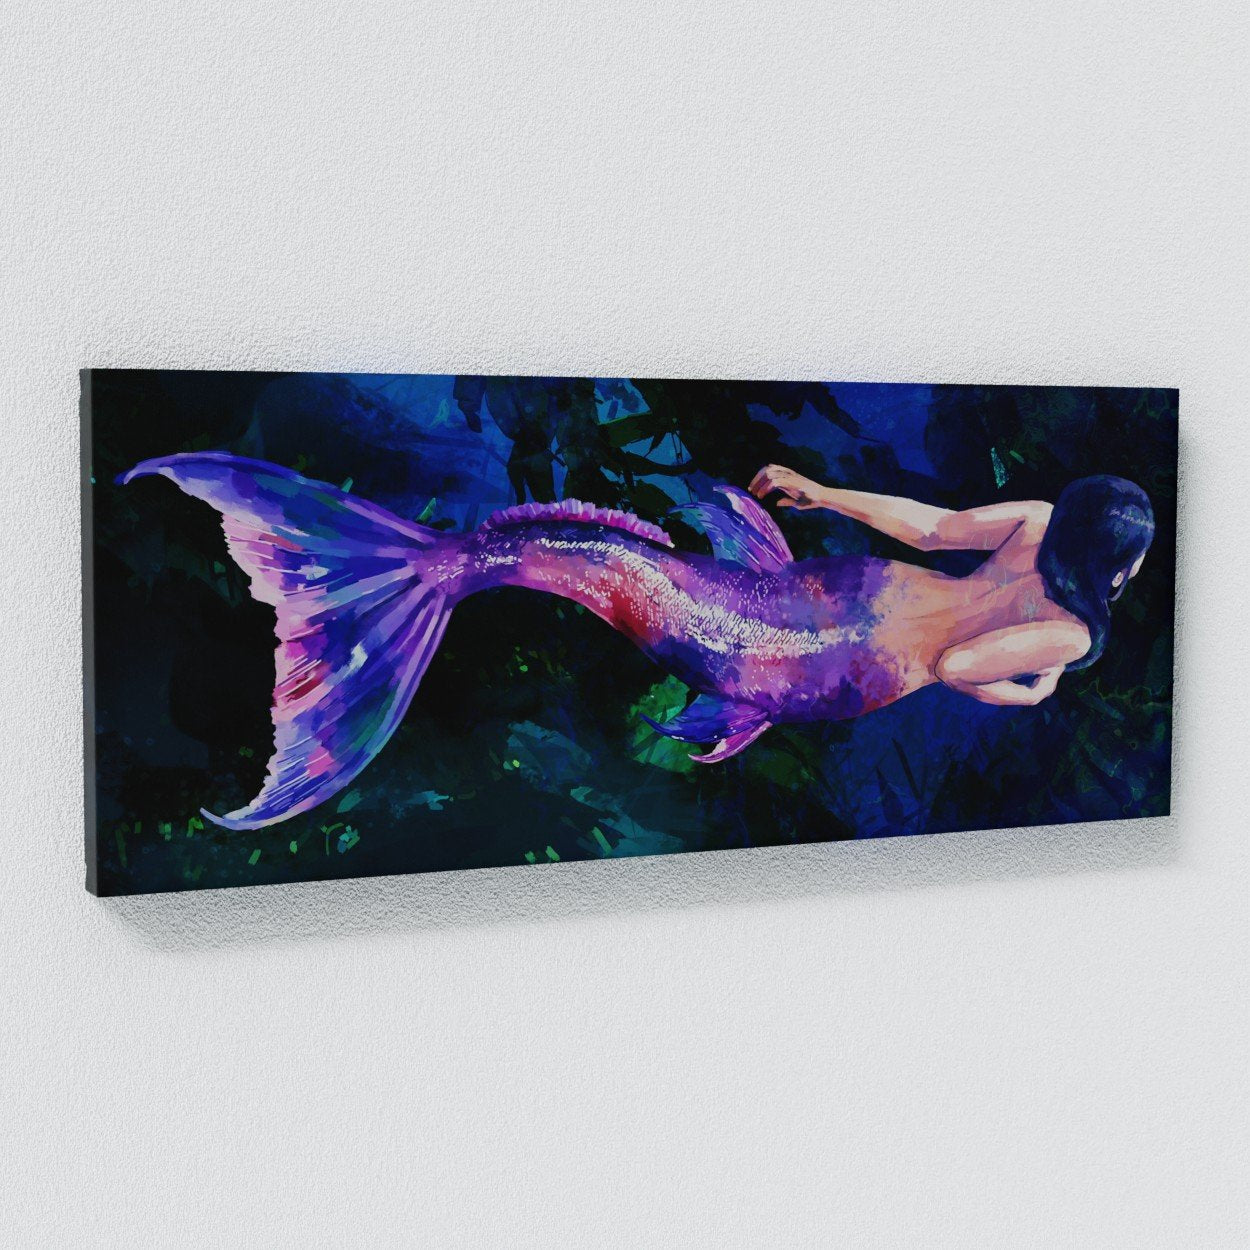 Mermaid & Whale Sci Fi Fantasy Underwater Coral Reef Ocean Wall Decor Art  Print Poster (16x20) - Impact Posters Gallery